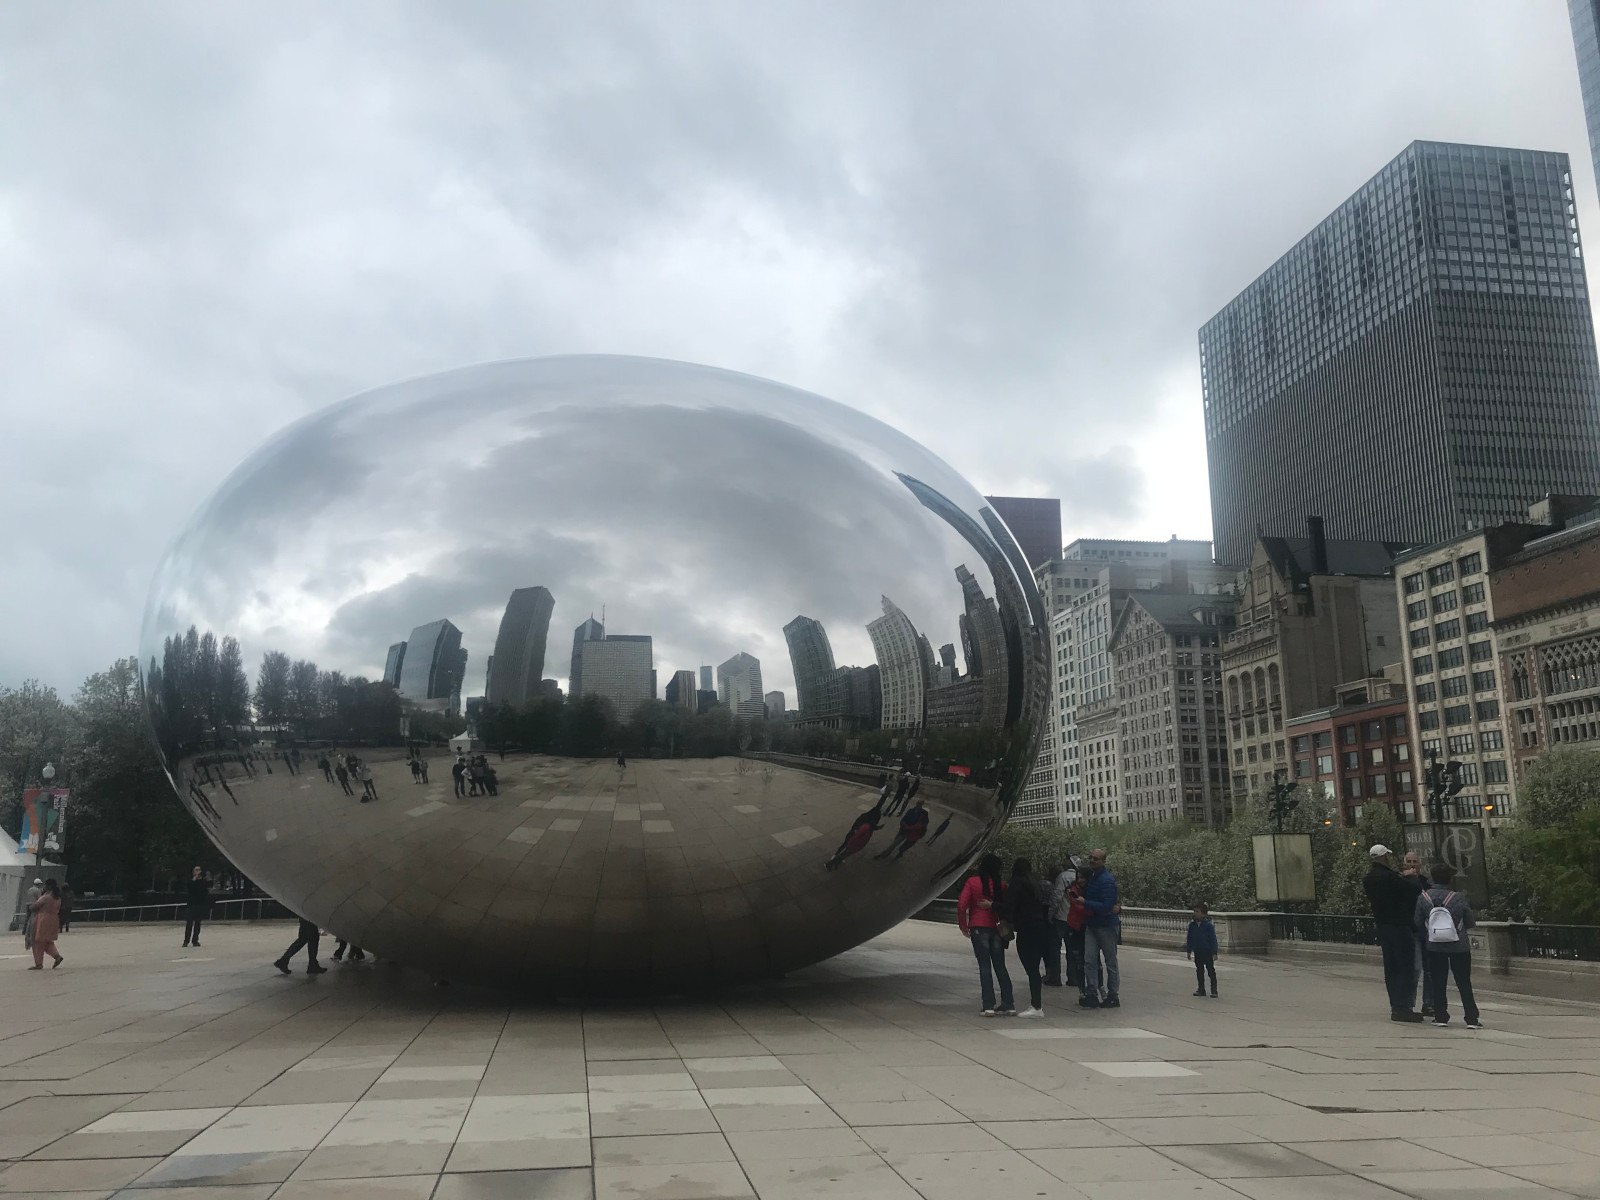 Cloud Gate (The Bean) - Chicago's landmark